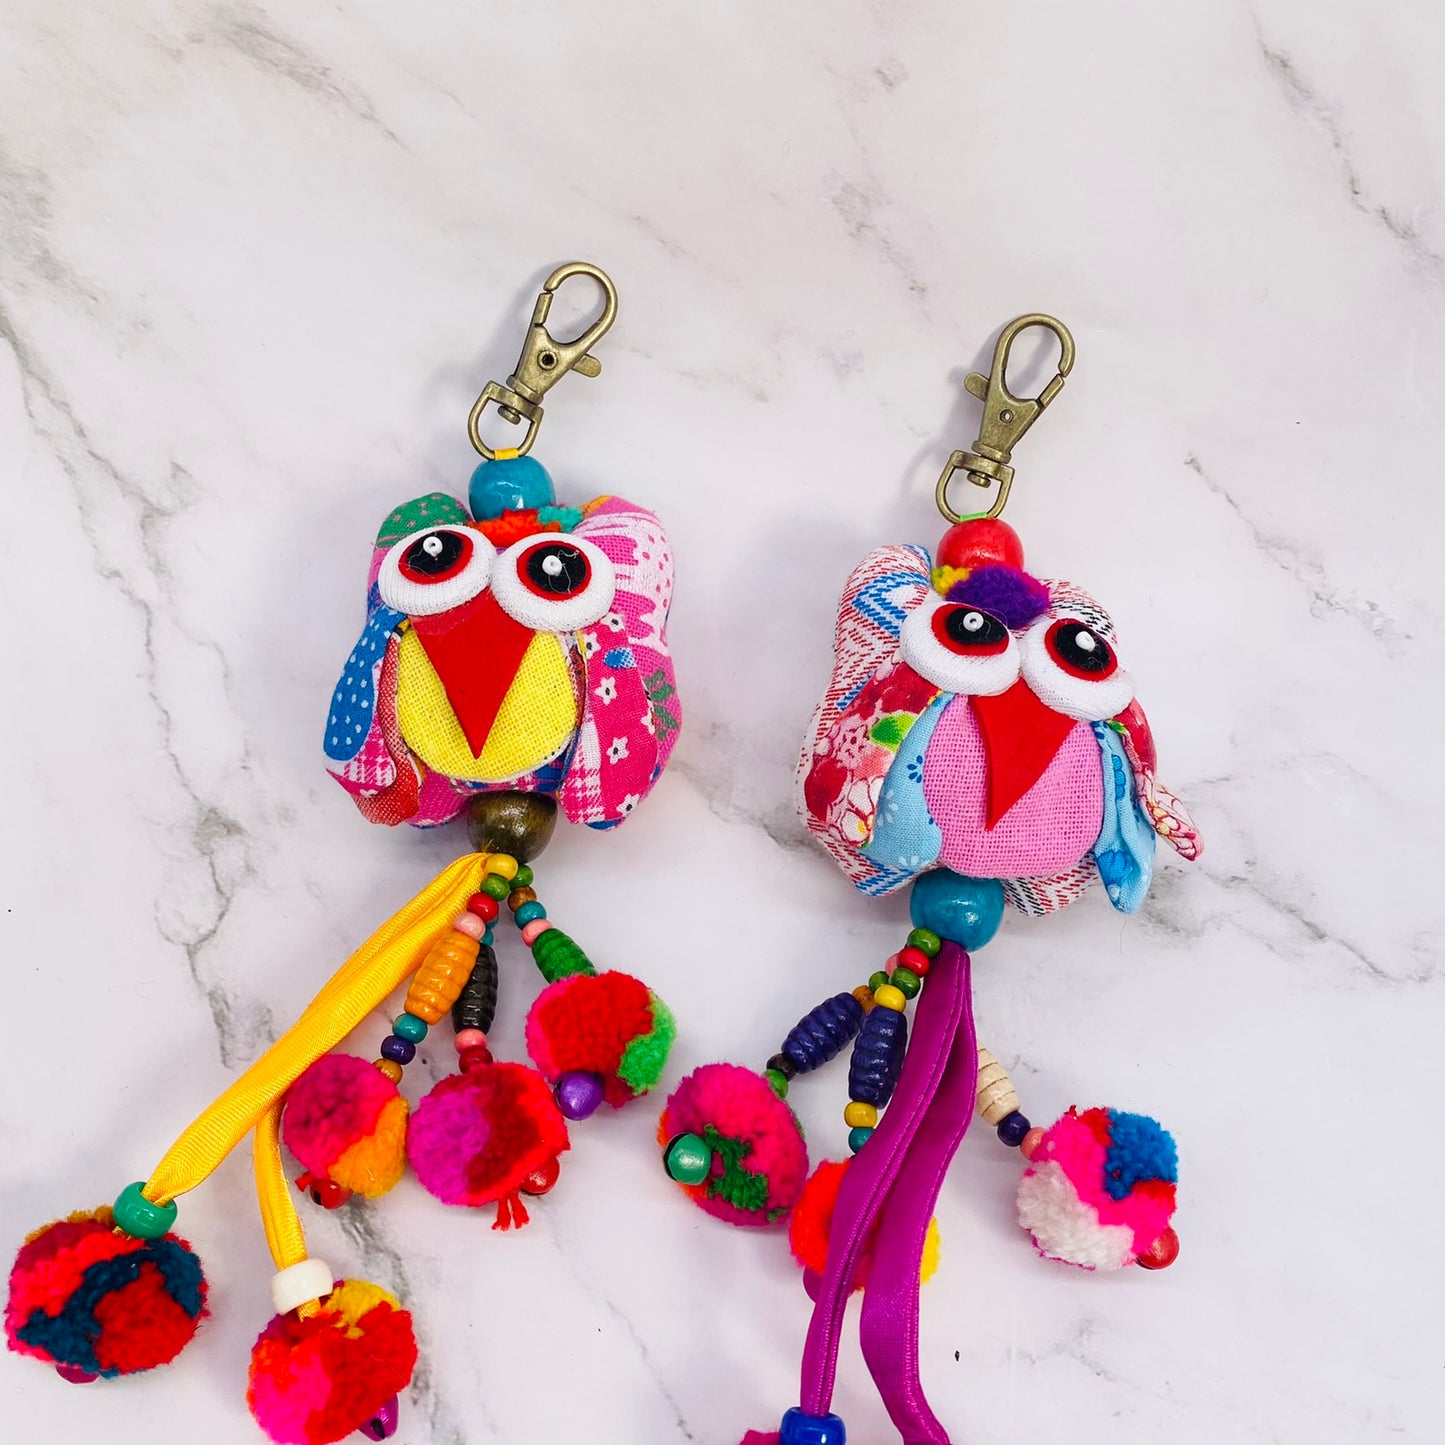 karmanepalcrafts Owl Keychain, Colorful Owl Bag Charm, Bag Accessories, Handmade Bag Charm, Cute Key Ring, Gift for Her, Symbol of Wisdom Blue